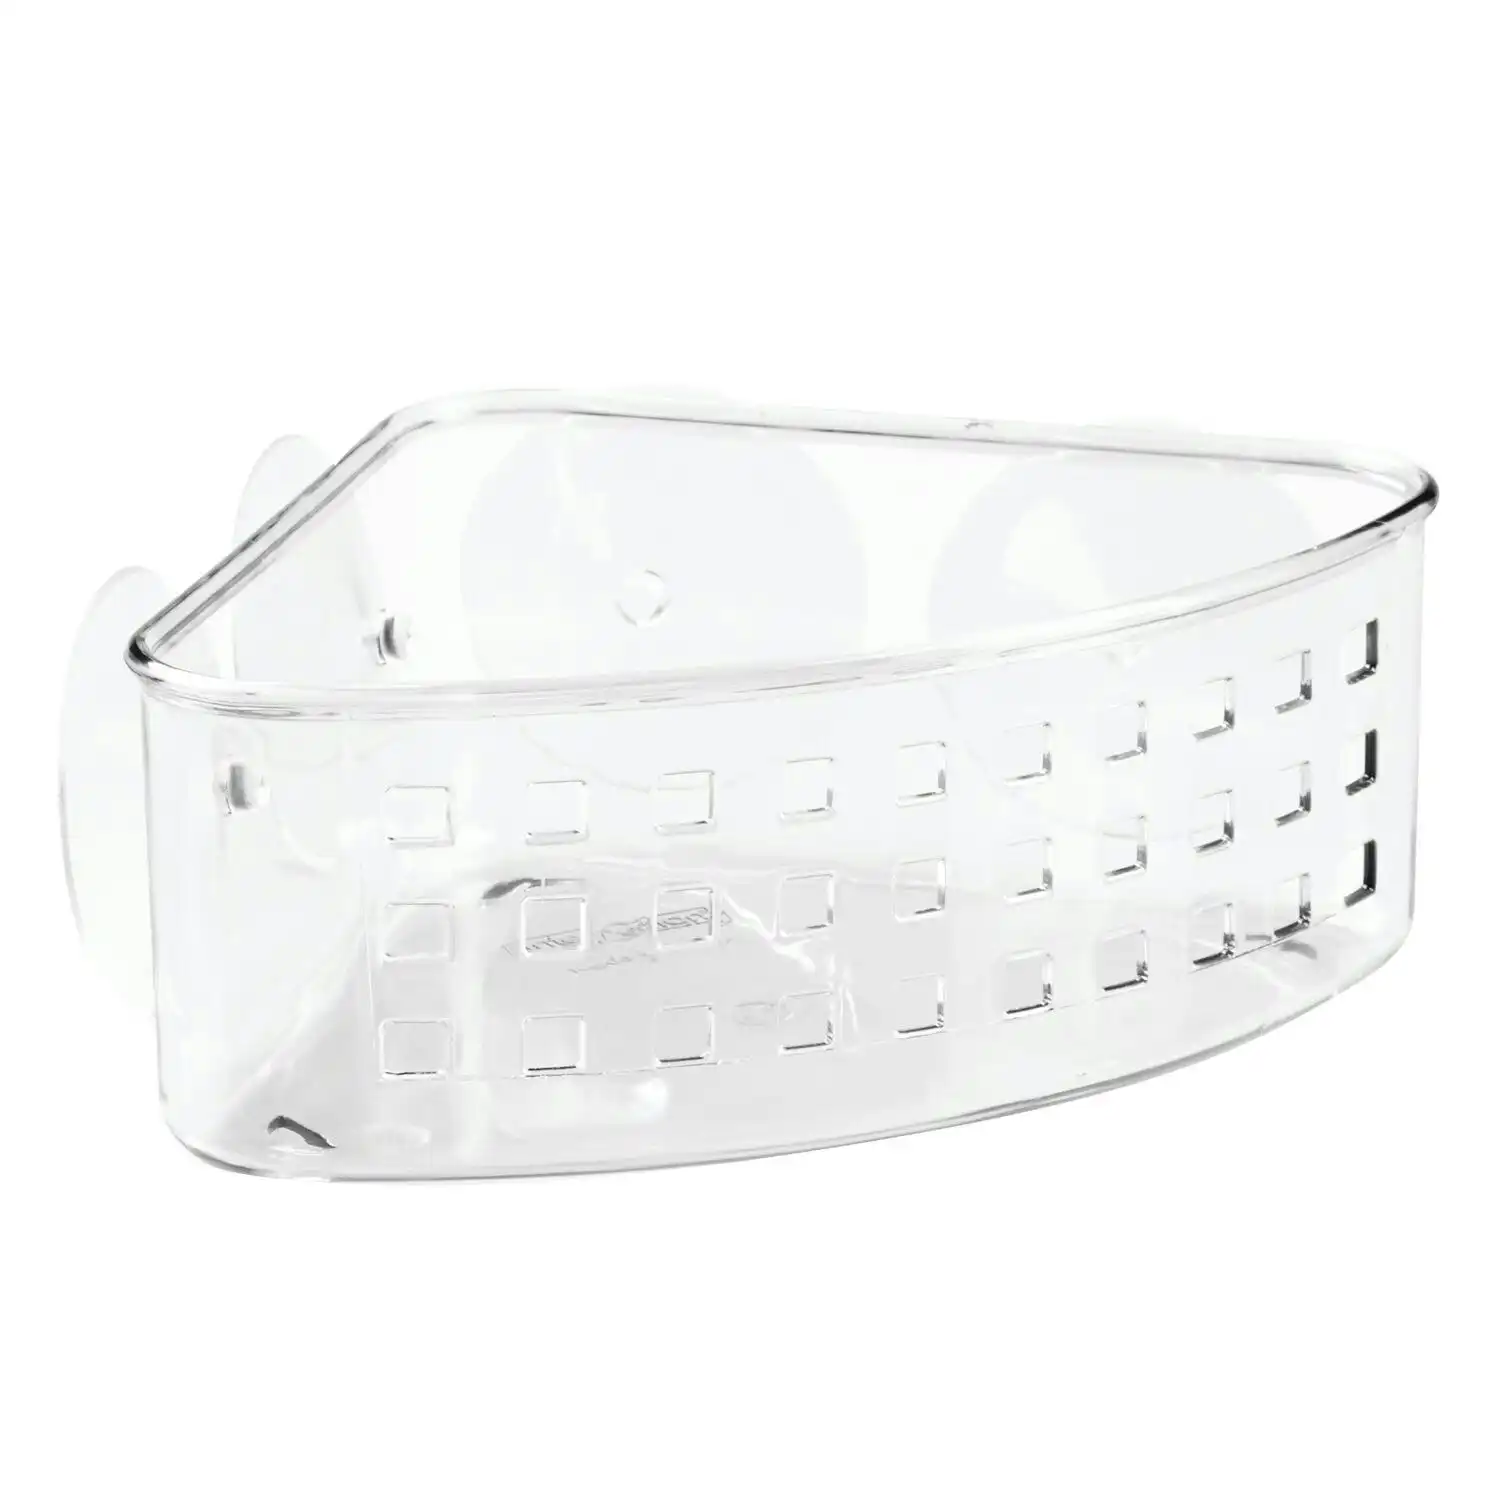 Idesign 23x16.5cm Shower Caddy Corner Suction Basket Shampoo/Soap Storage Clear